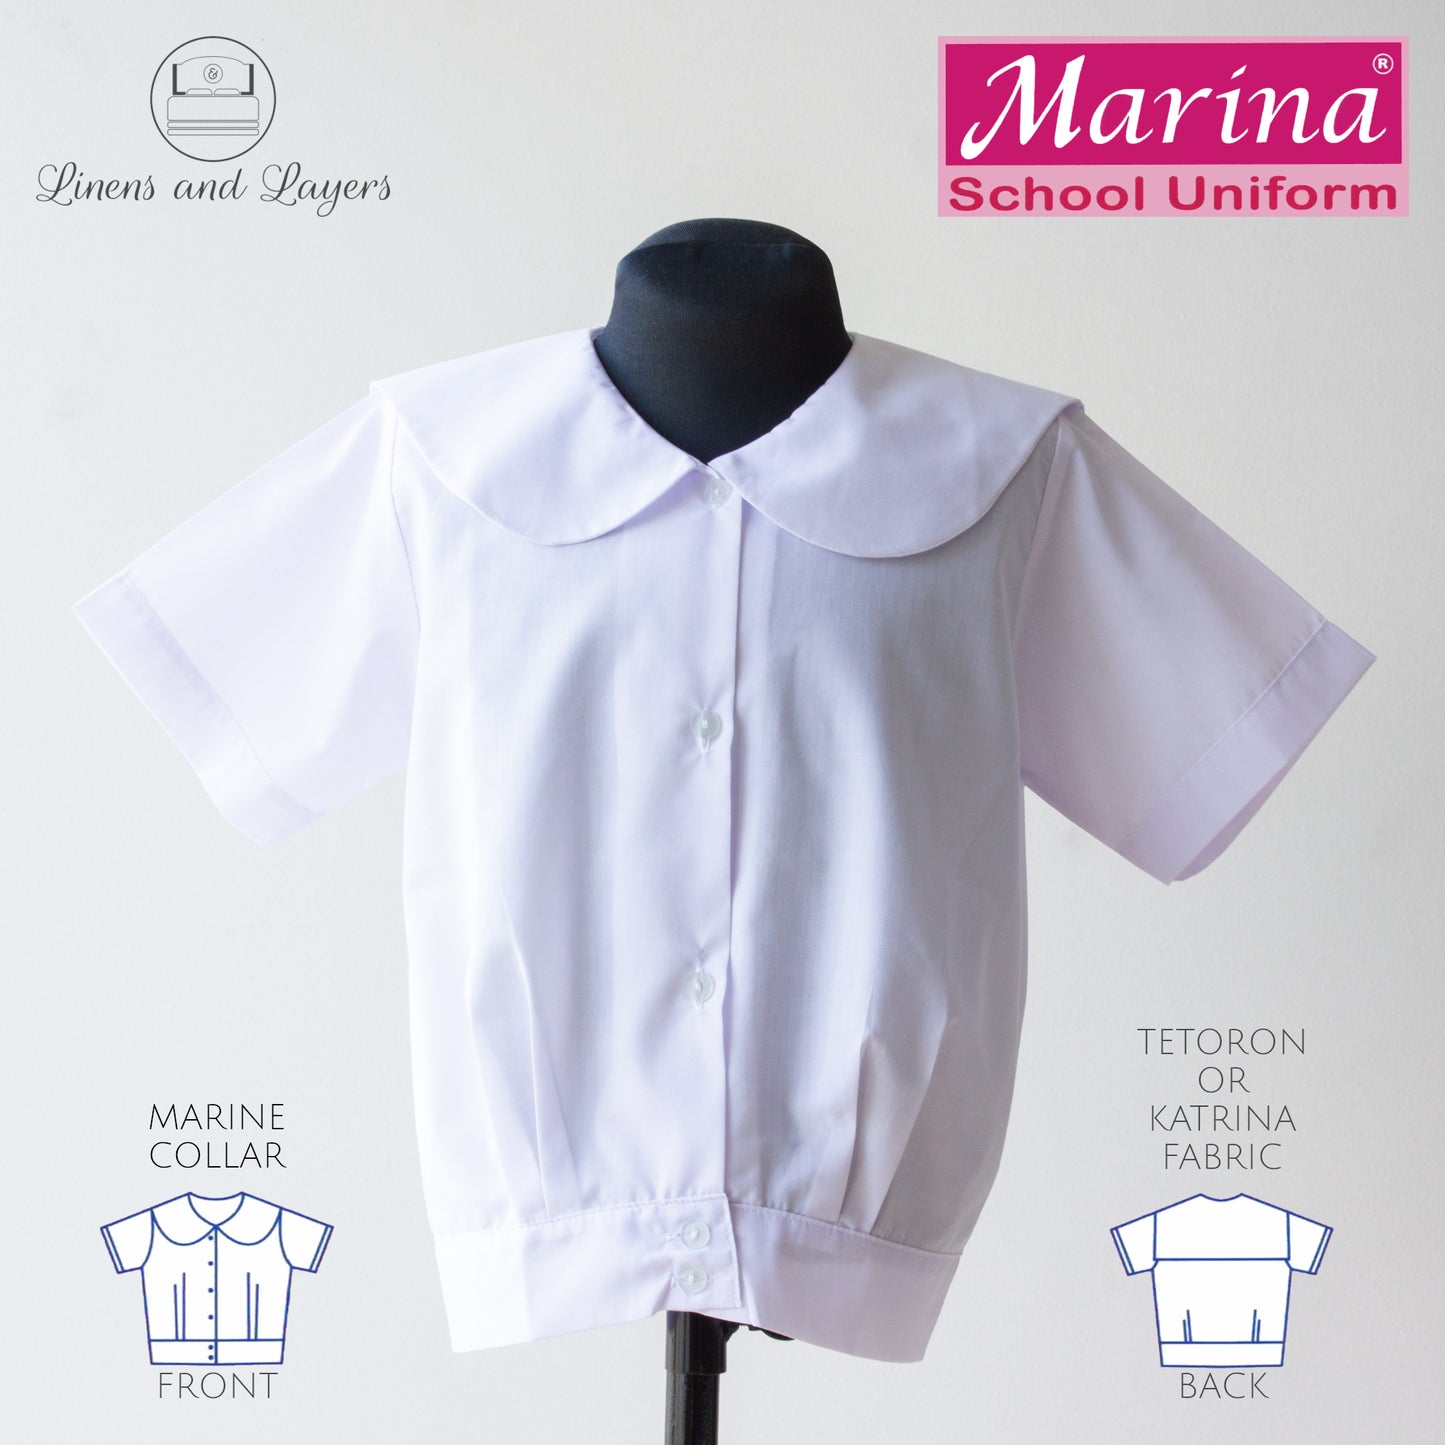 Marina Ladies' School Uniform - Marine Collar - Tetoron / Katrina